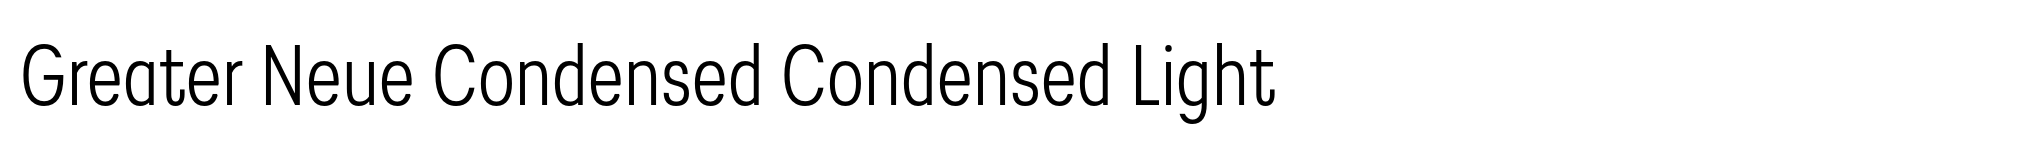 Greater Neue Condensed Condensed Light image